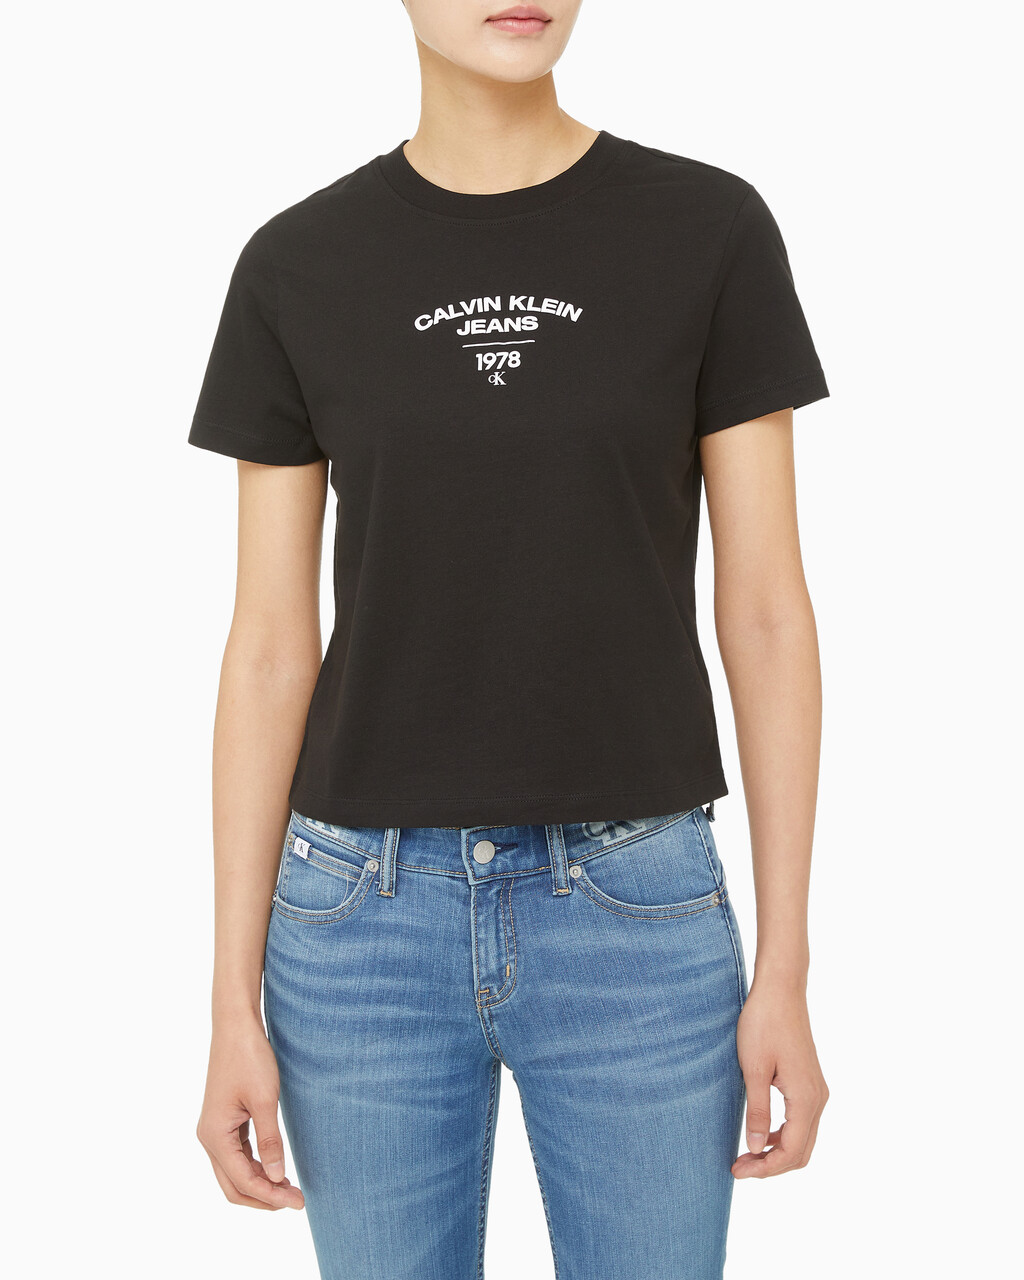 Buy 여성 1987 로고 베이비핏 반팔 티셔츠 in color CK BLACK